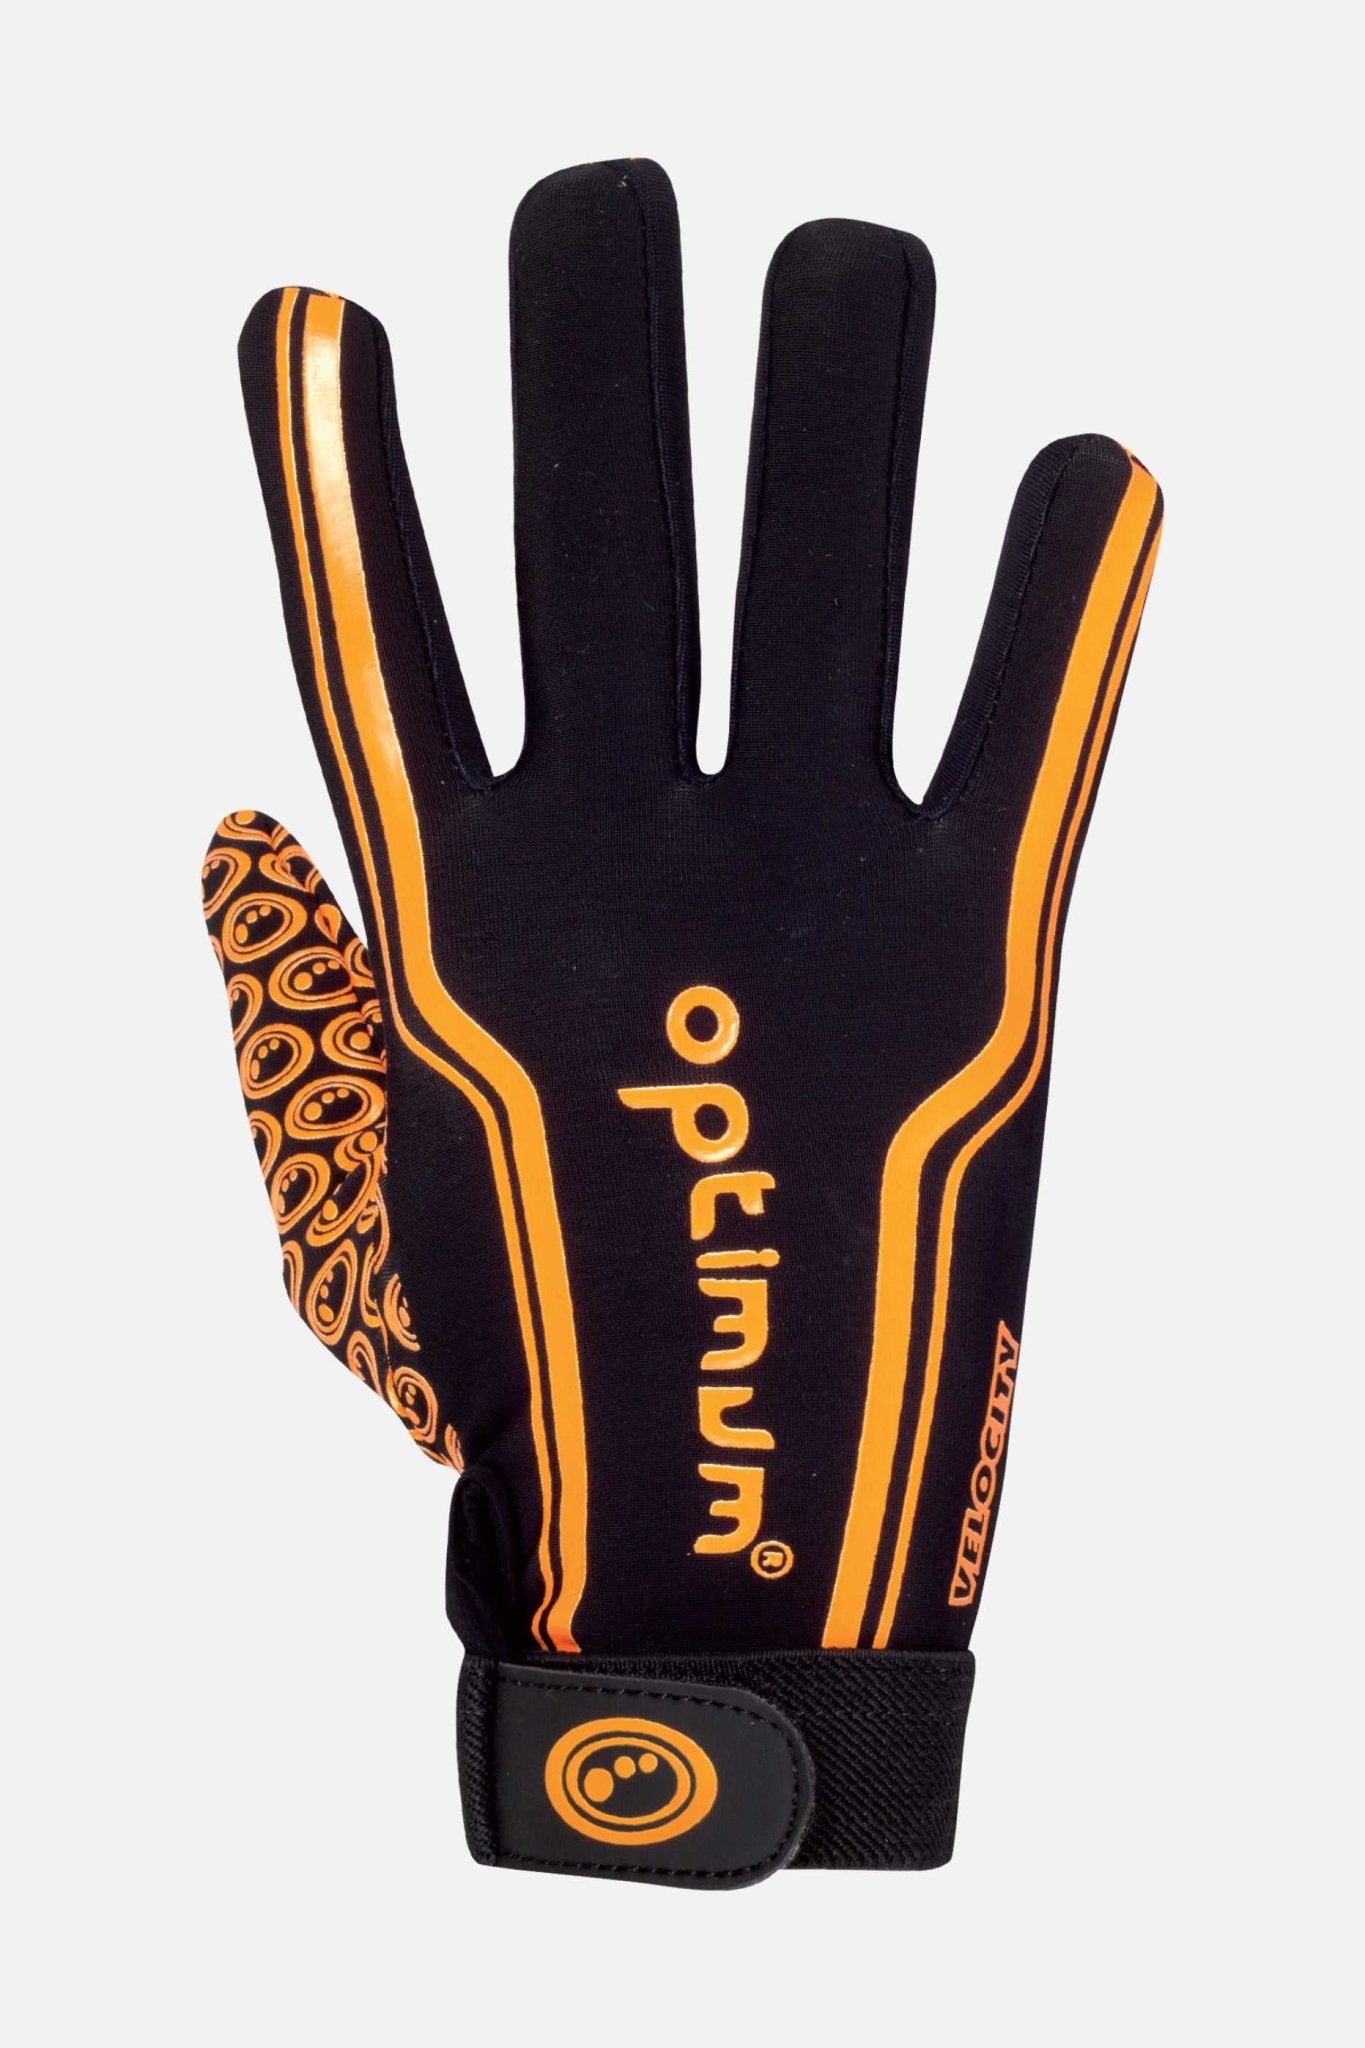 Velocity Thermal Gloves - Optimum